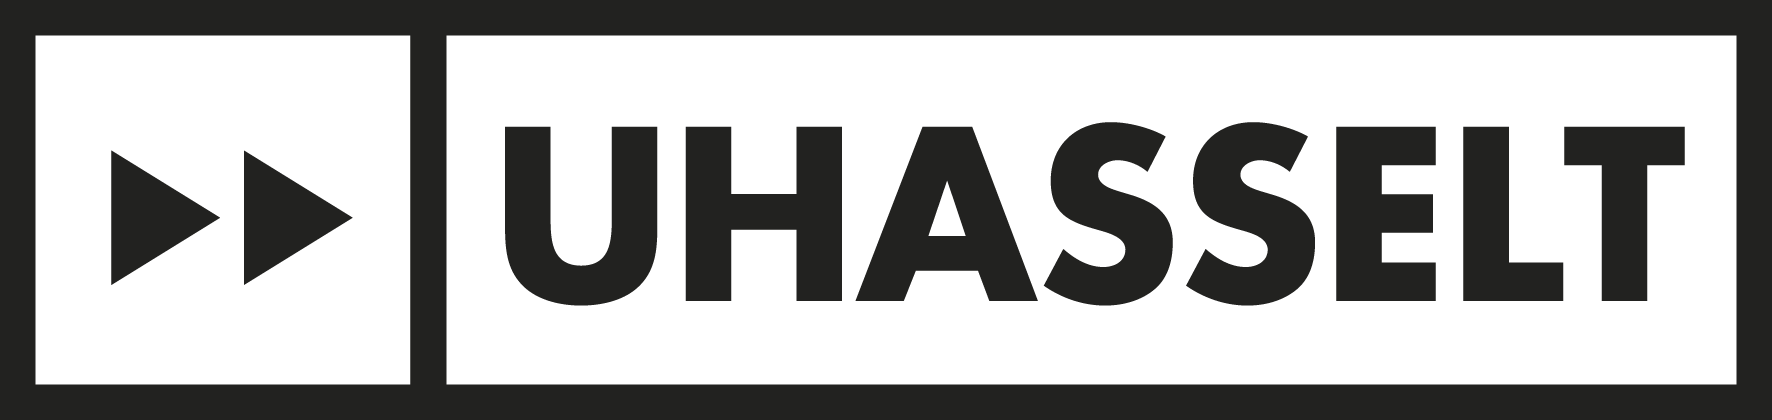 University of Hasselt Logo